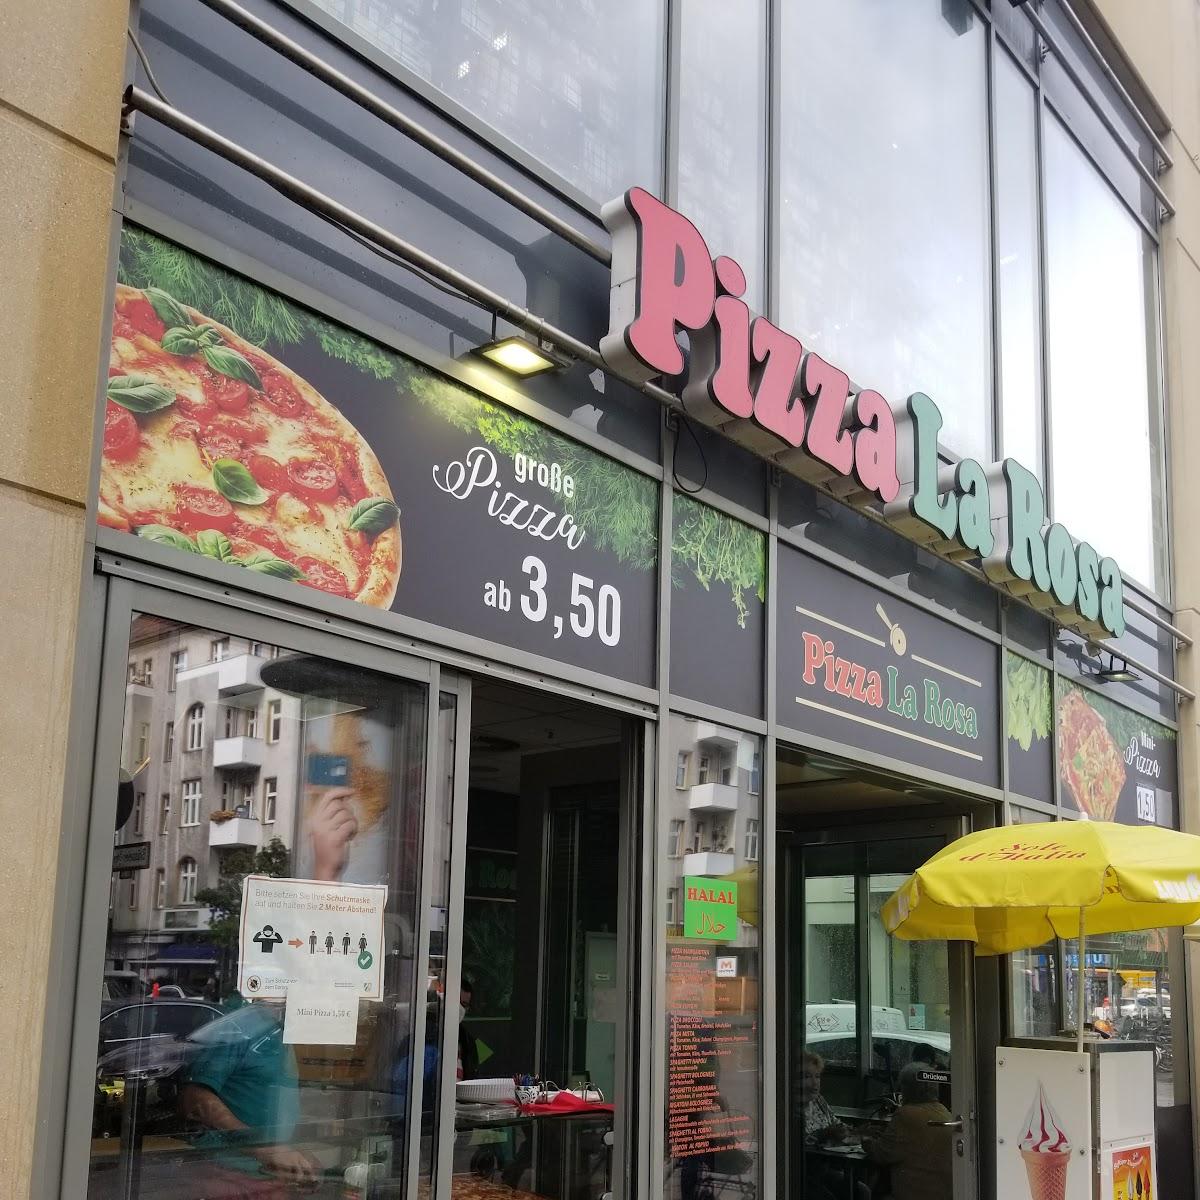 Restaurant "Pizza La Rossa" in Berlin